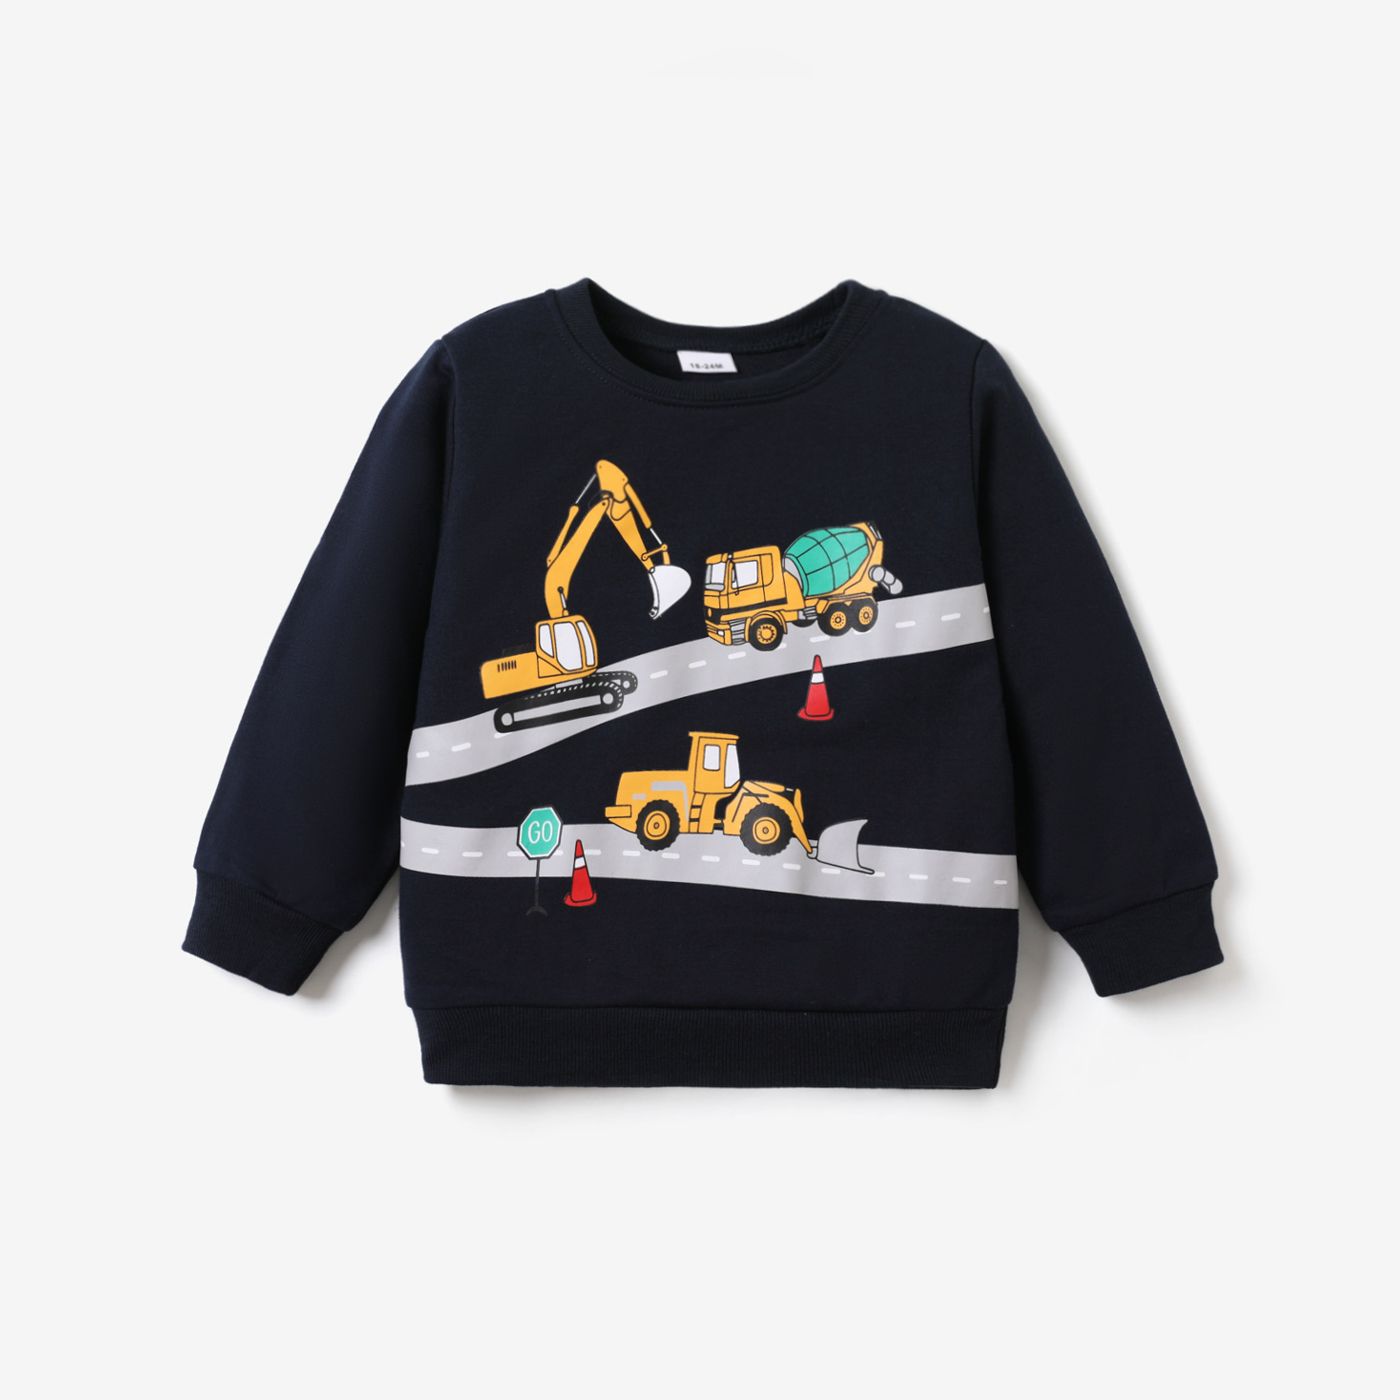 Toddler Boy 100% Cotton Vehicle Excavator Print Casual Pullover Sweatshirt